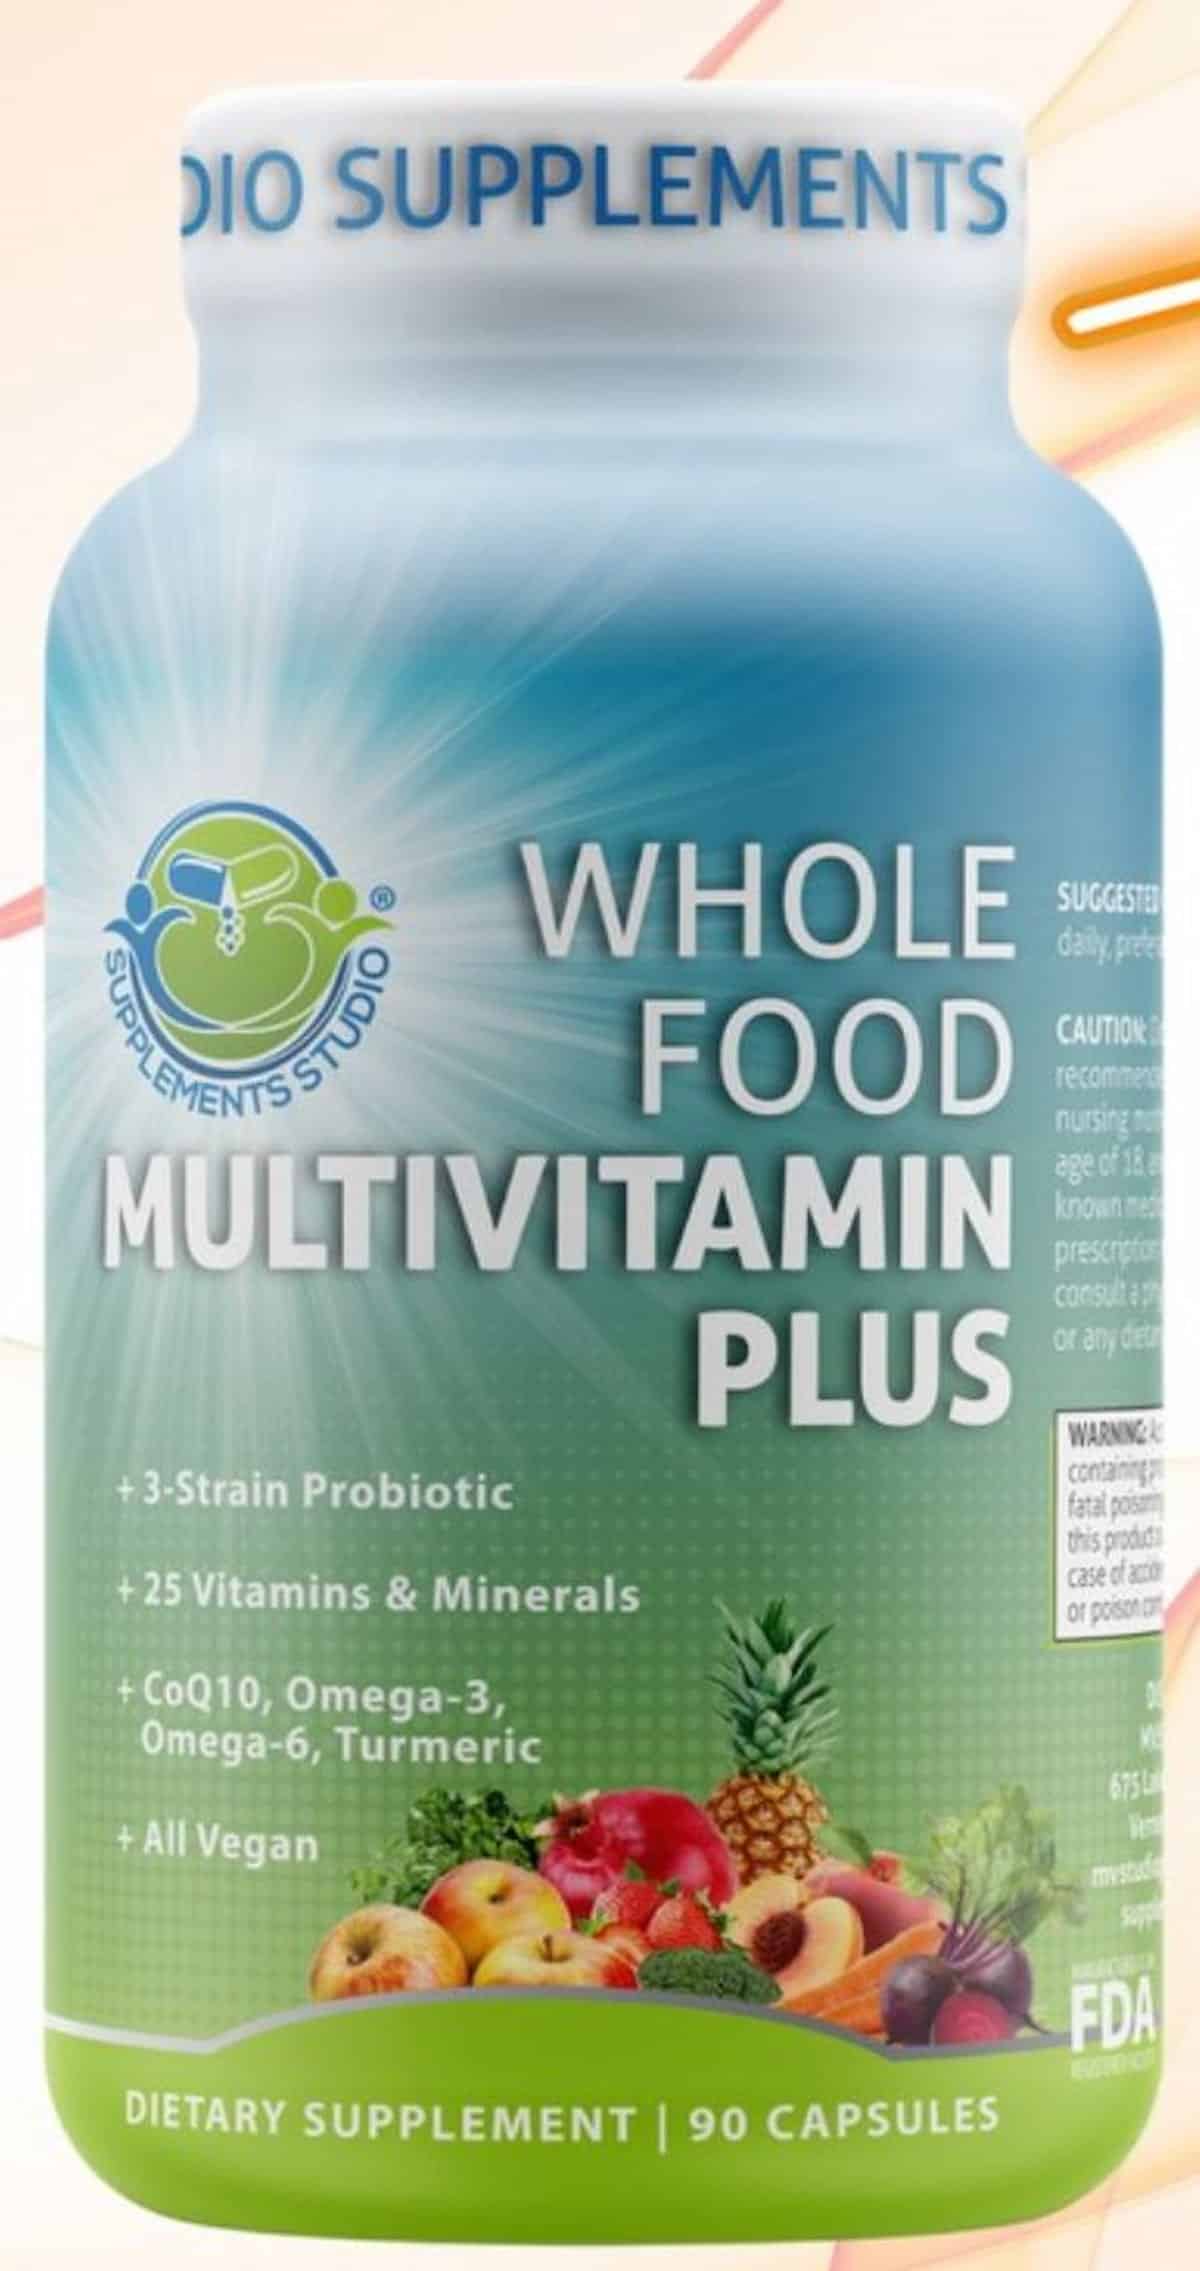 A bottle of Supplements Studio brand vegan multivitamins.